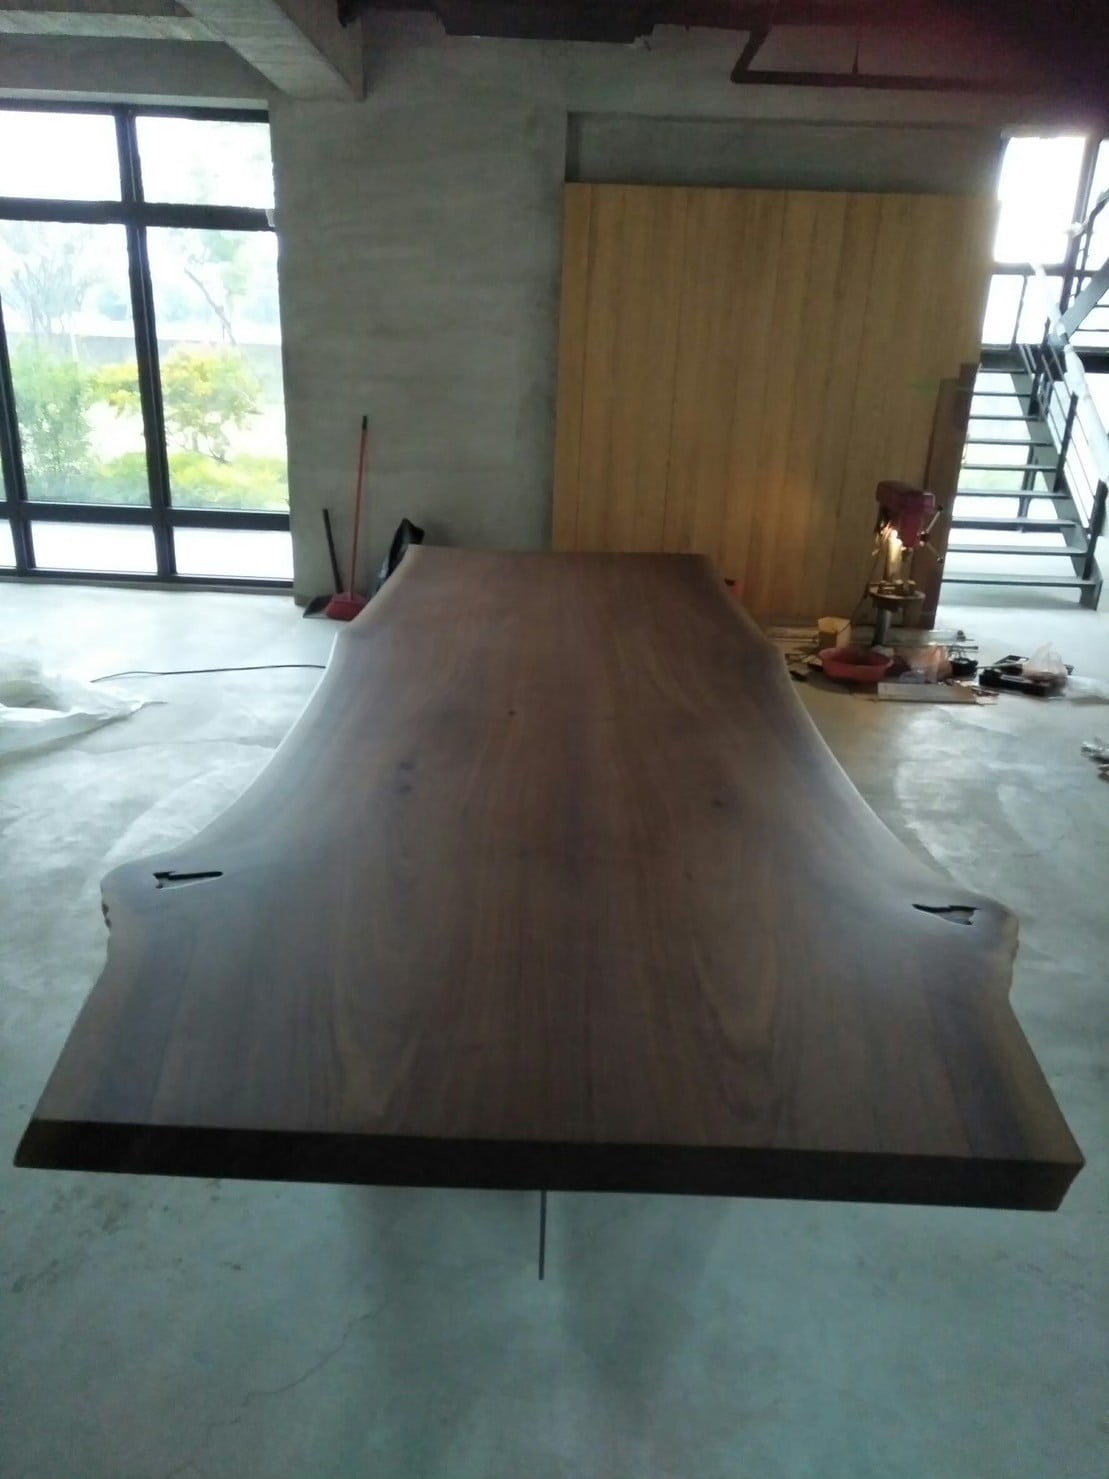 LINE ALBUM 桌凳 230426 68 1 木制品 木製 家具訂製 高雄家具 傢俱 客製化,高雄家具,高雄傢俱,IKEA,桌板訂製,訂製,專屬,木製品